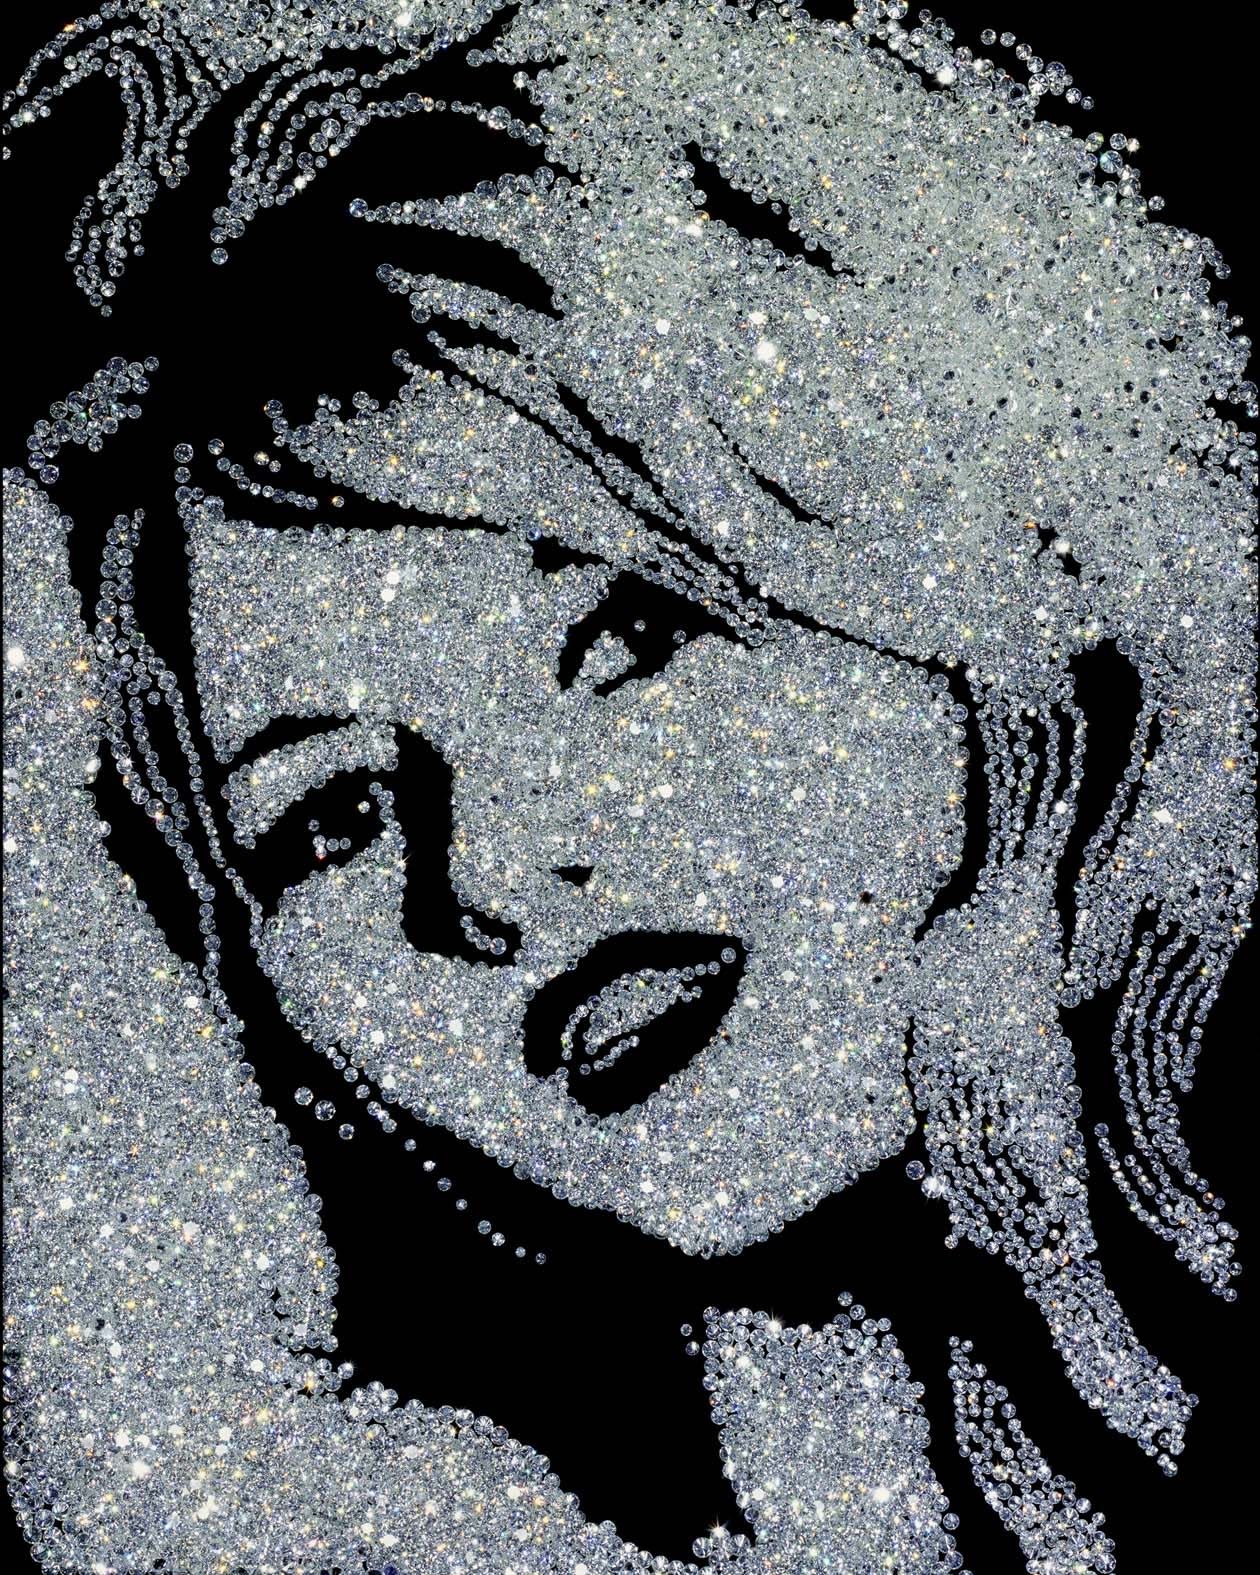 Vik Muniz Diamonds photograph of Brigitte Bardot's face made out of diamonds against black background